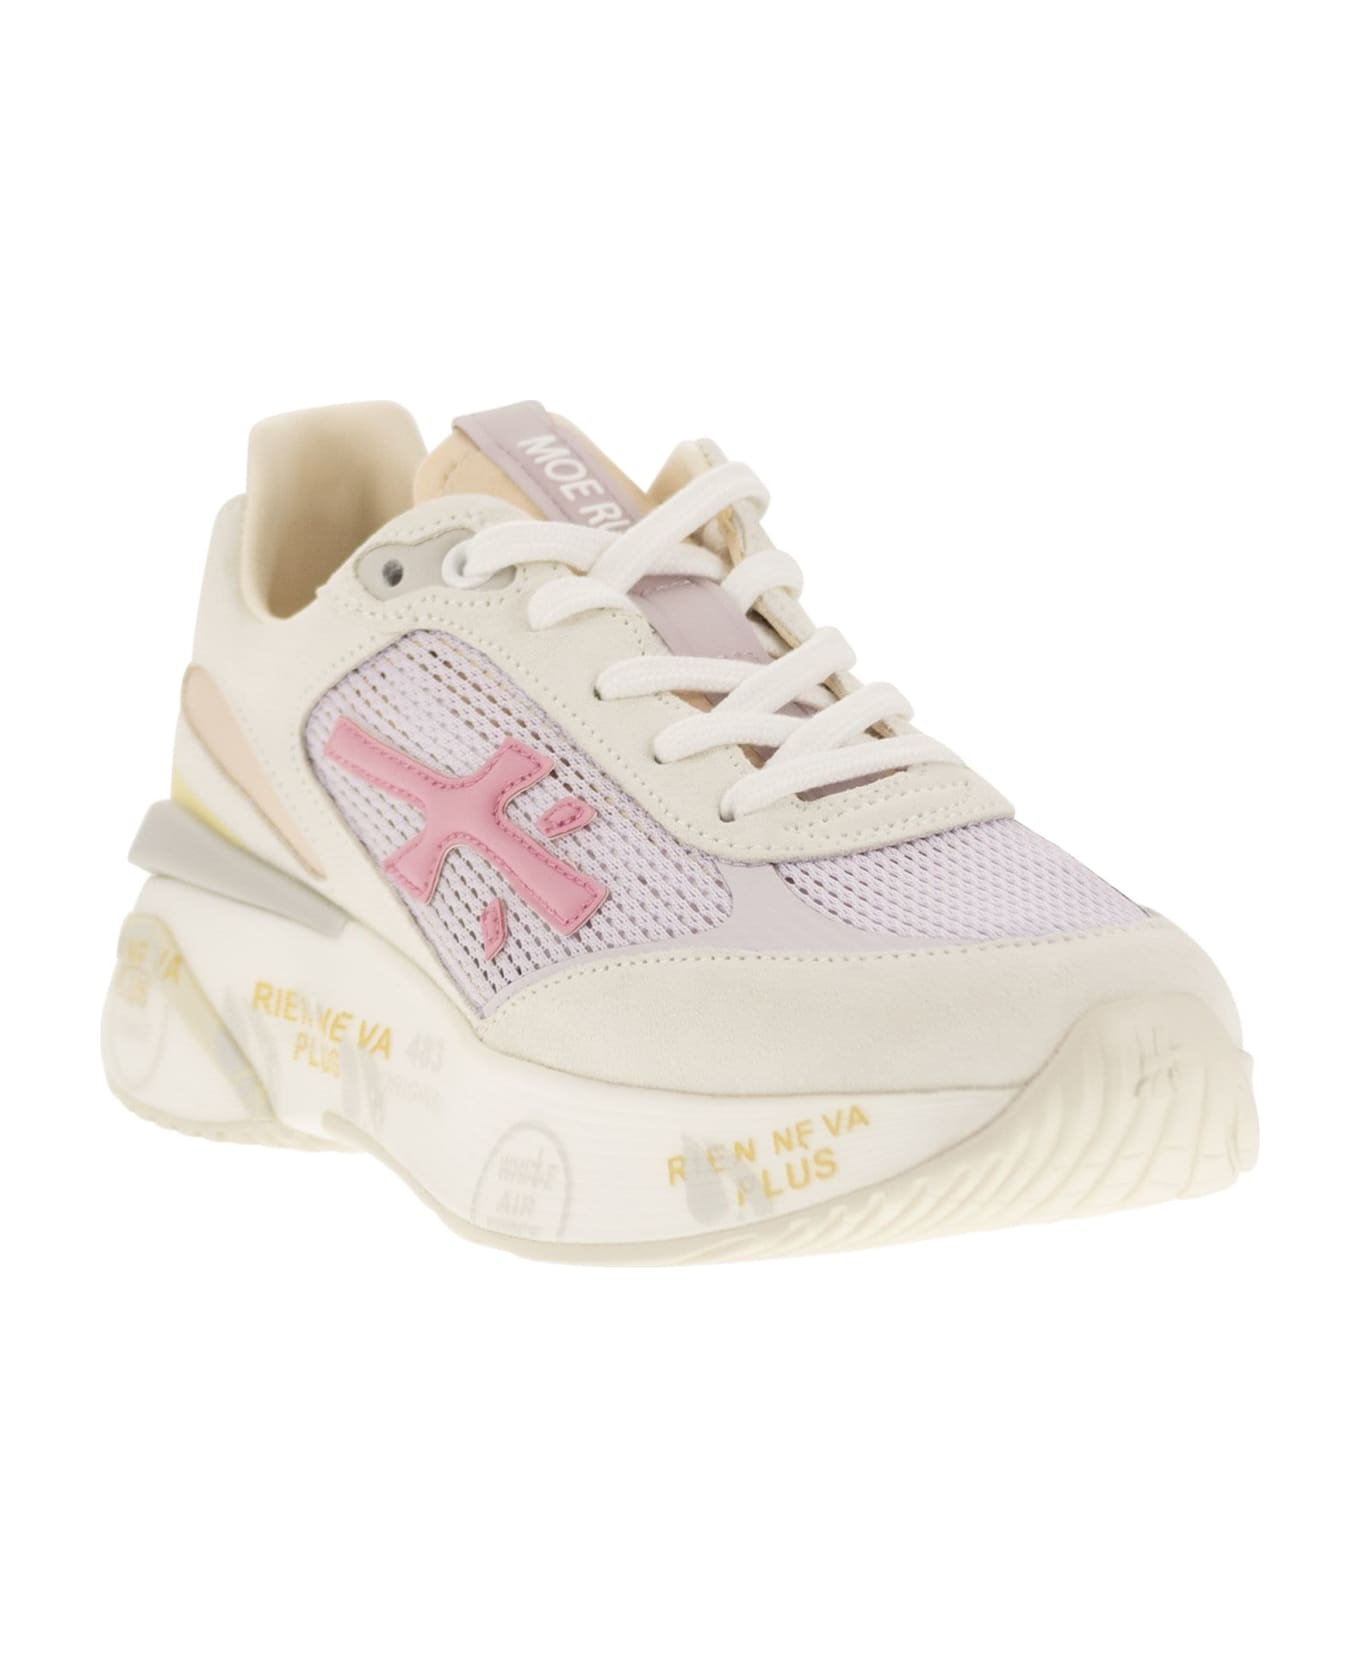 Premiata Moerund Sneakers - White/pink